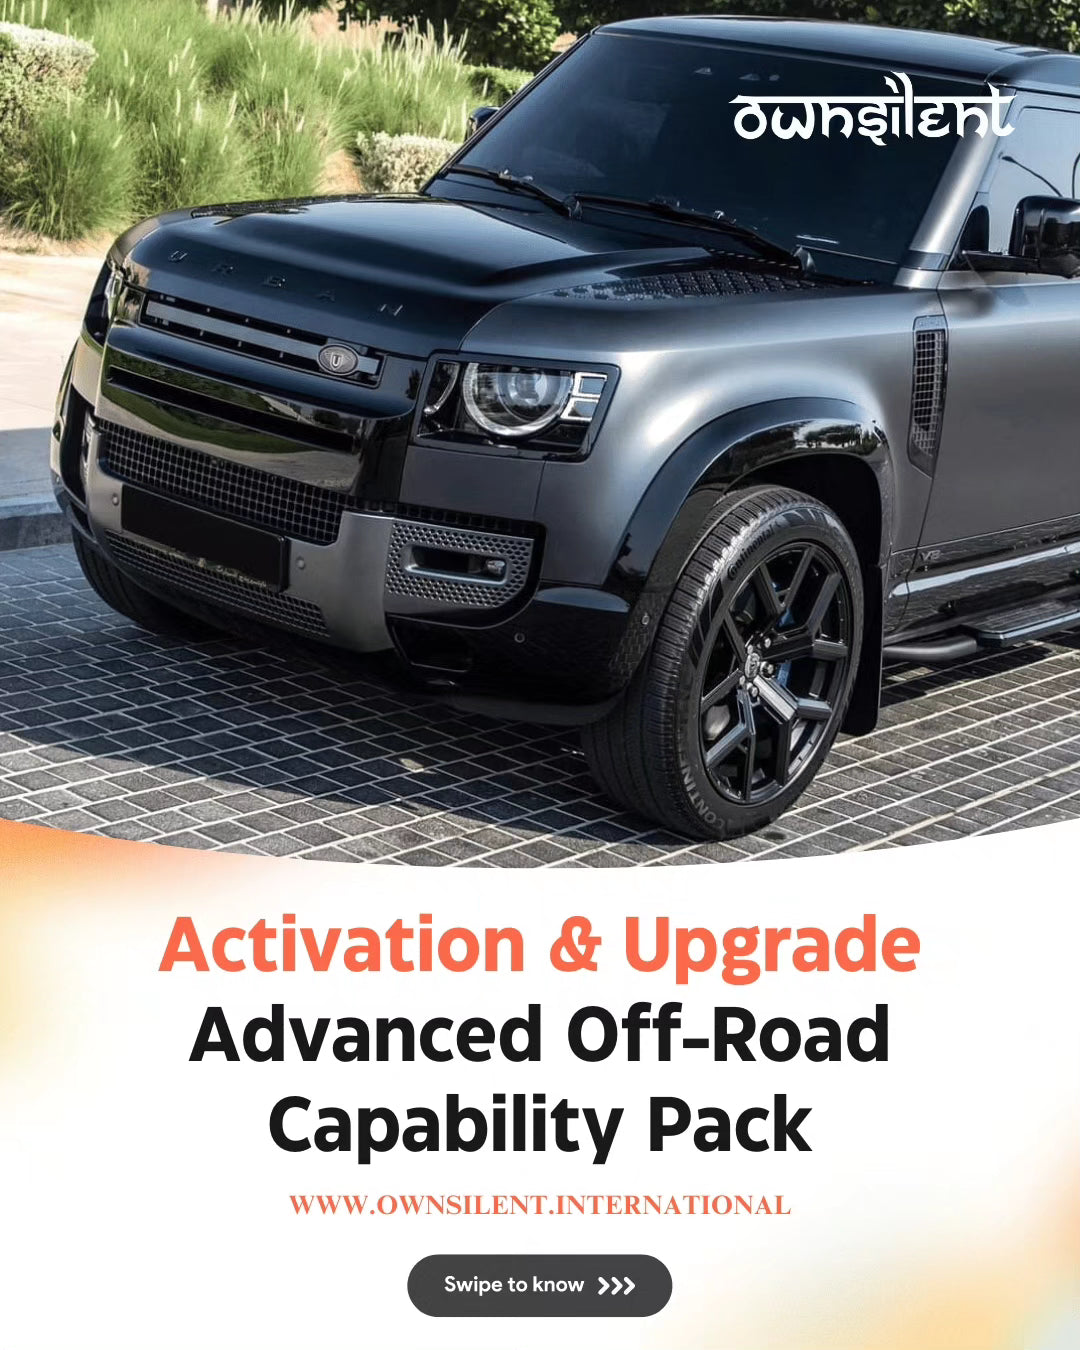 Land Rover Defender Features Unlock